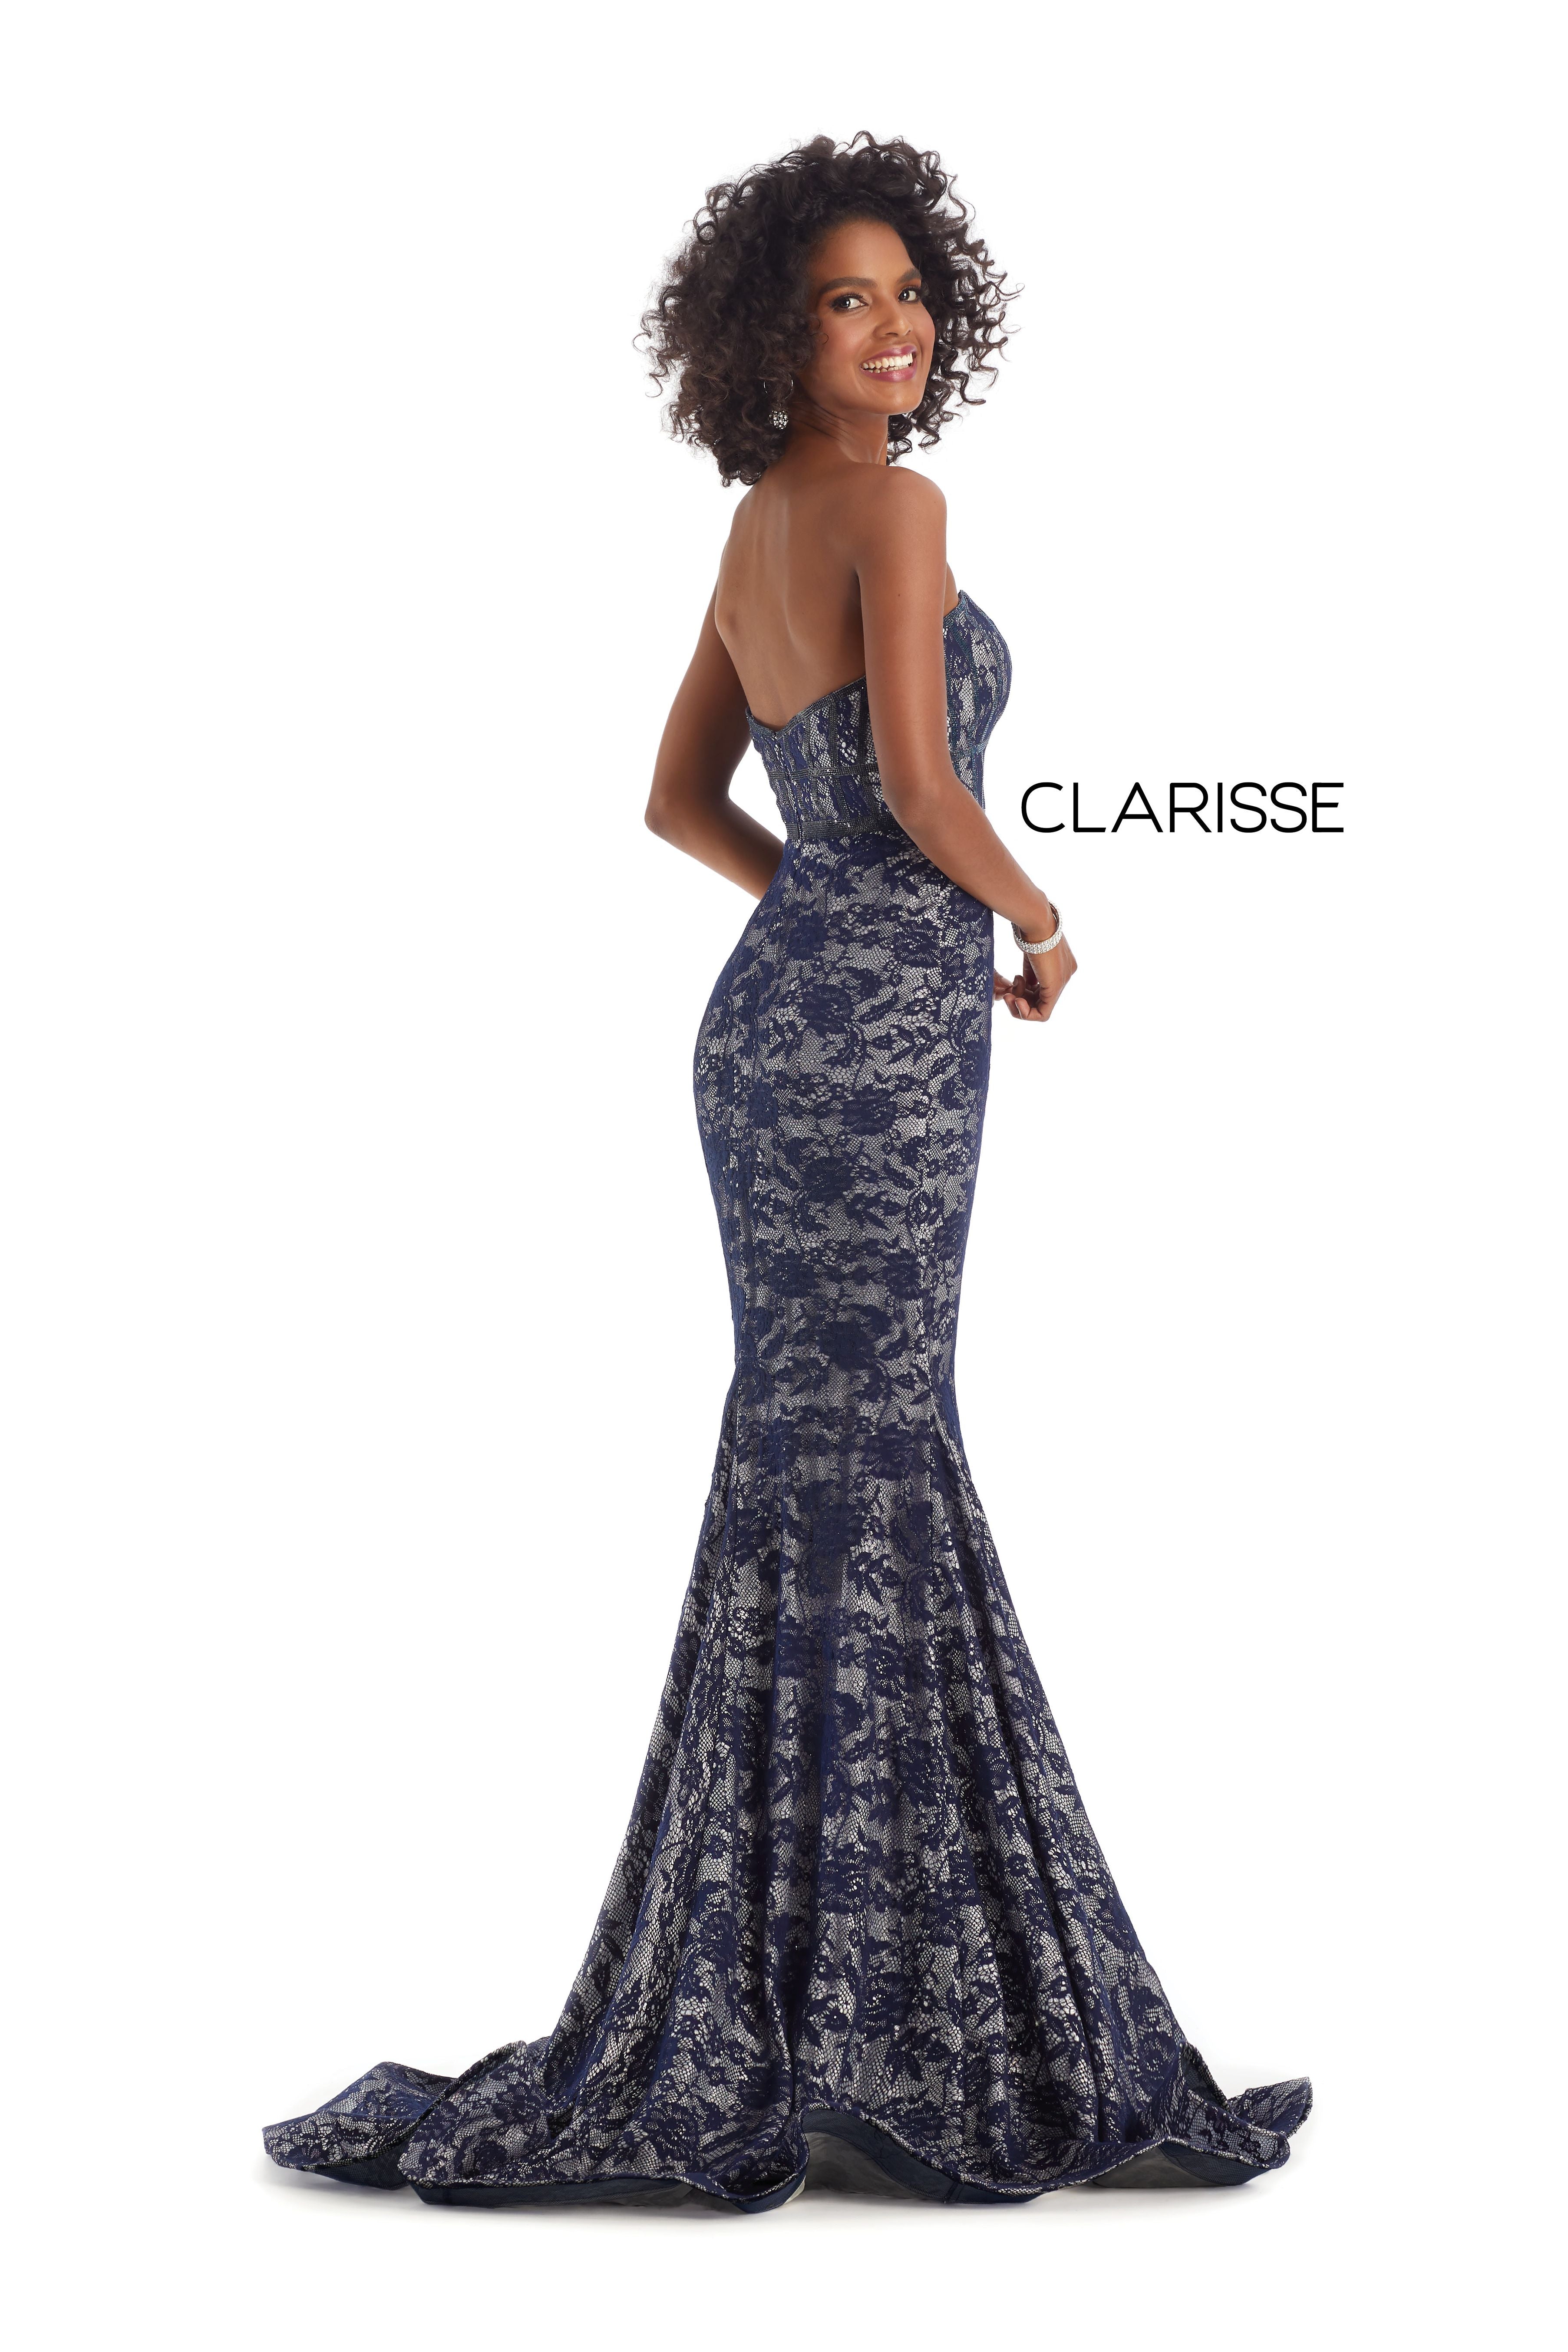 Clarisse -8242 Strapless Mermaid Prom Dress